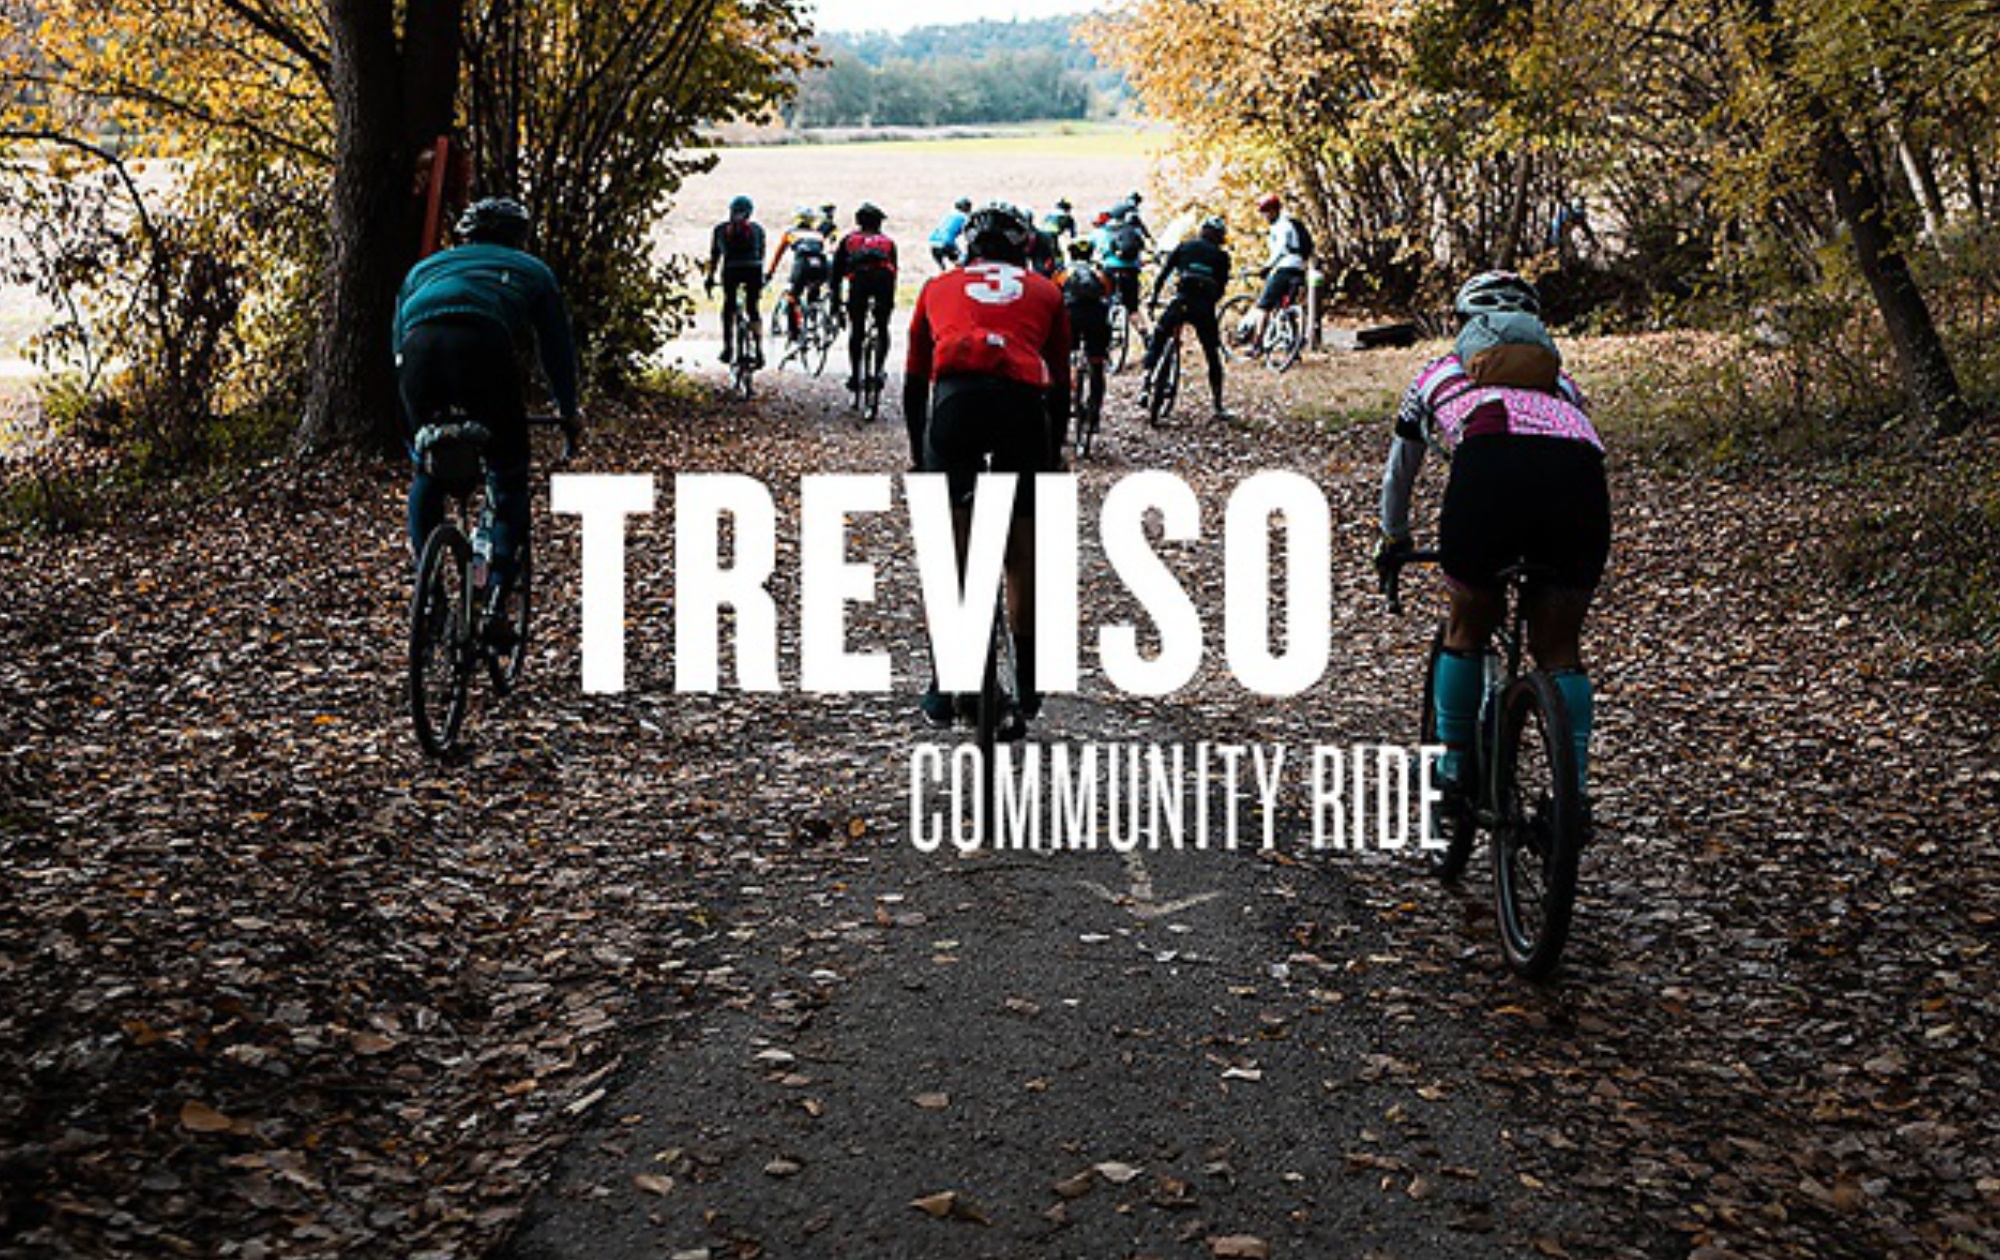 Treviso Community Ride